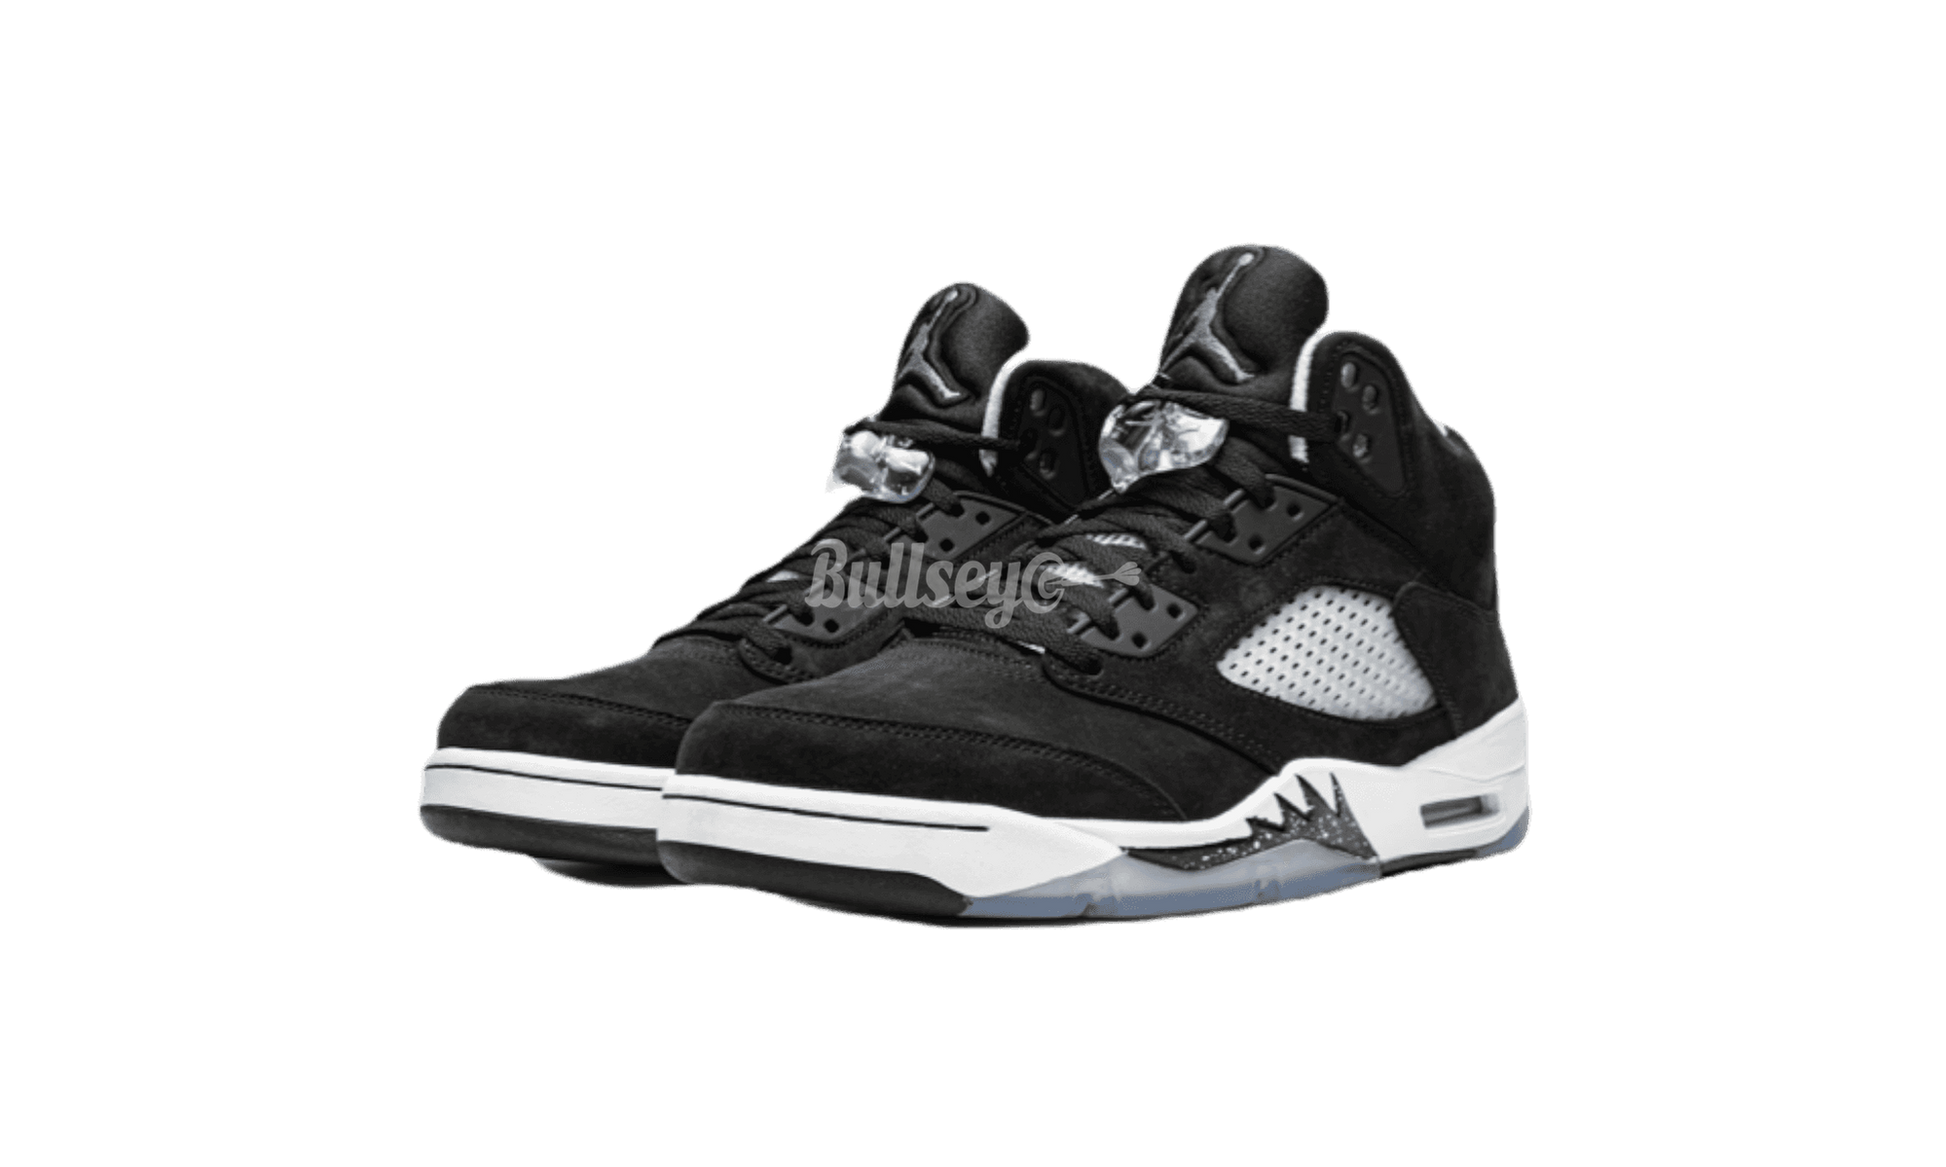 Air Jordan 5 Retro "Moonlight" - Bullseye Sneaker Boutique